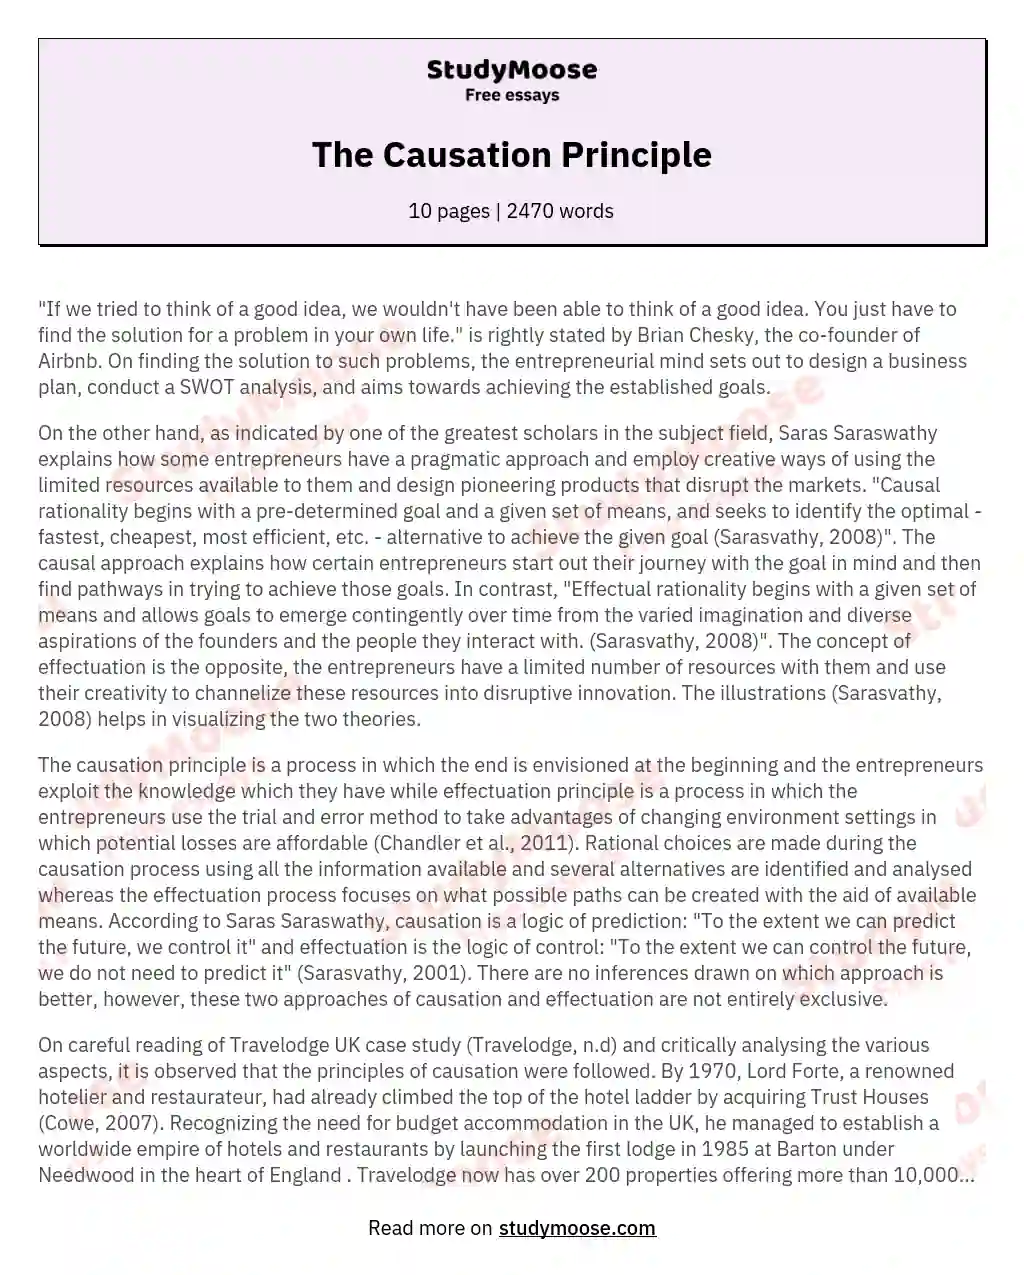 The Causation Principle essay